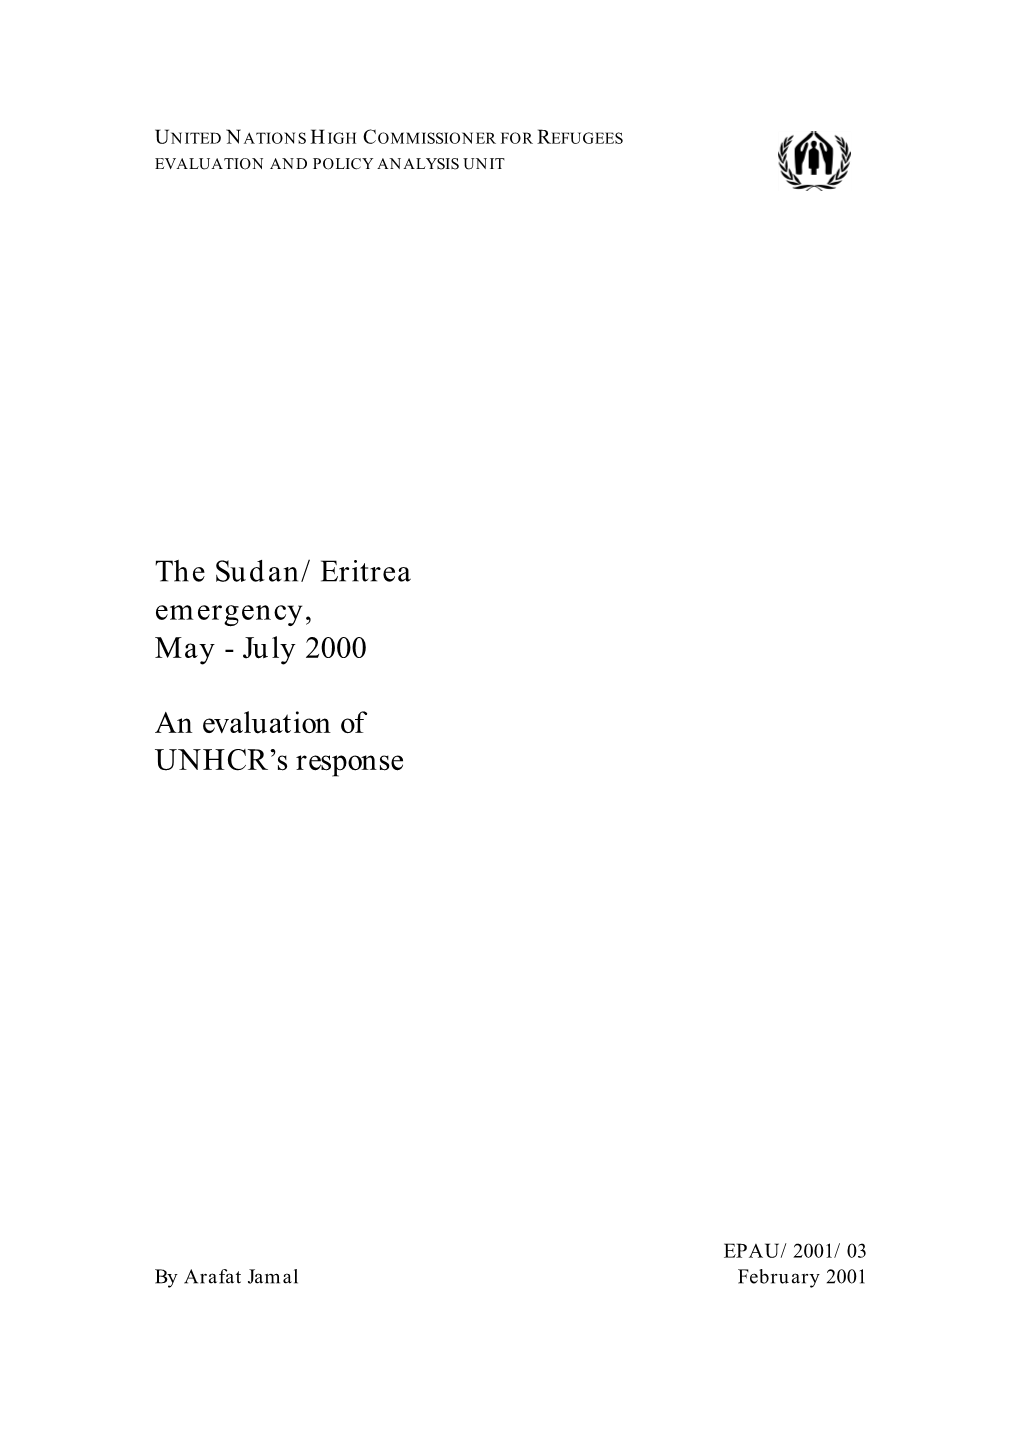 The Sudan/Eritrea Emergency, May - July 2000